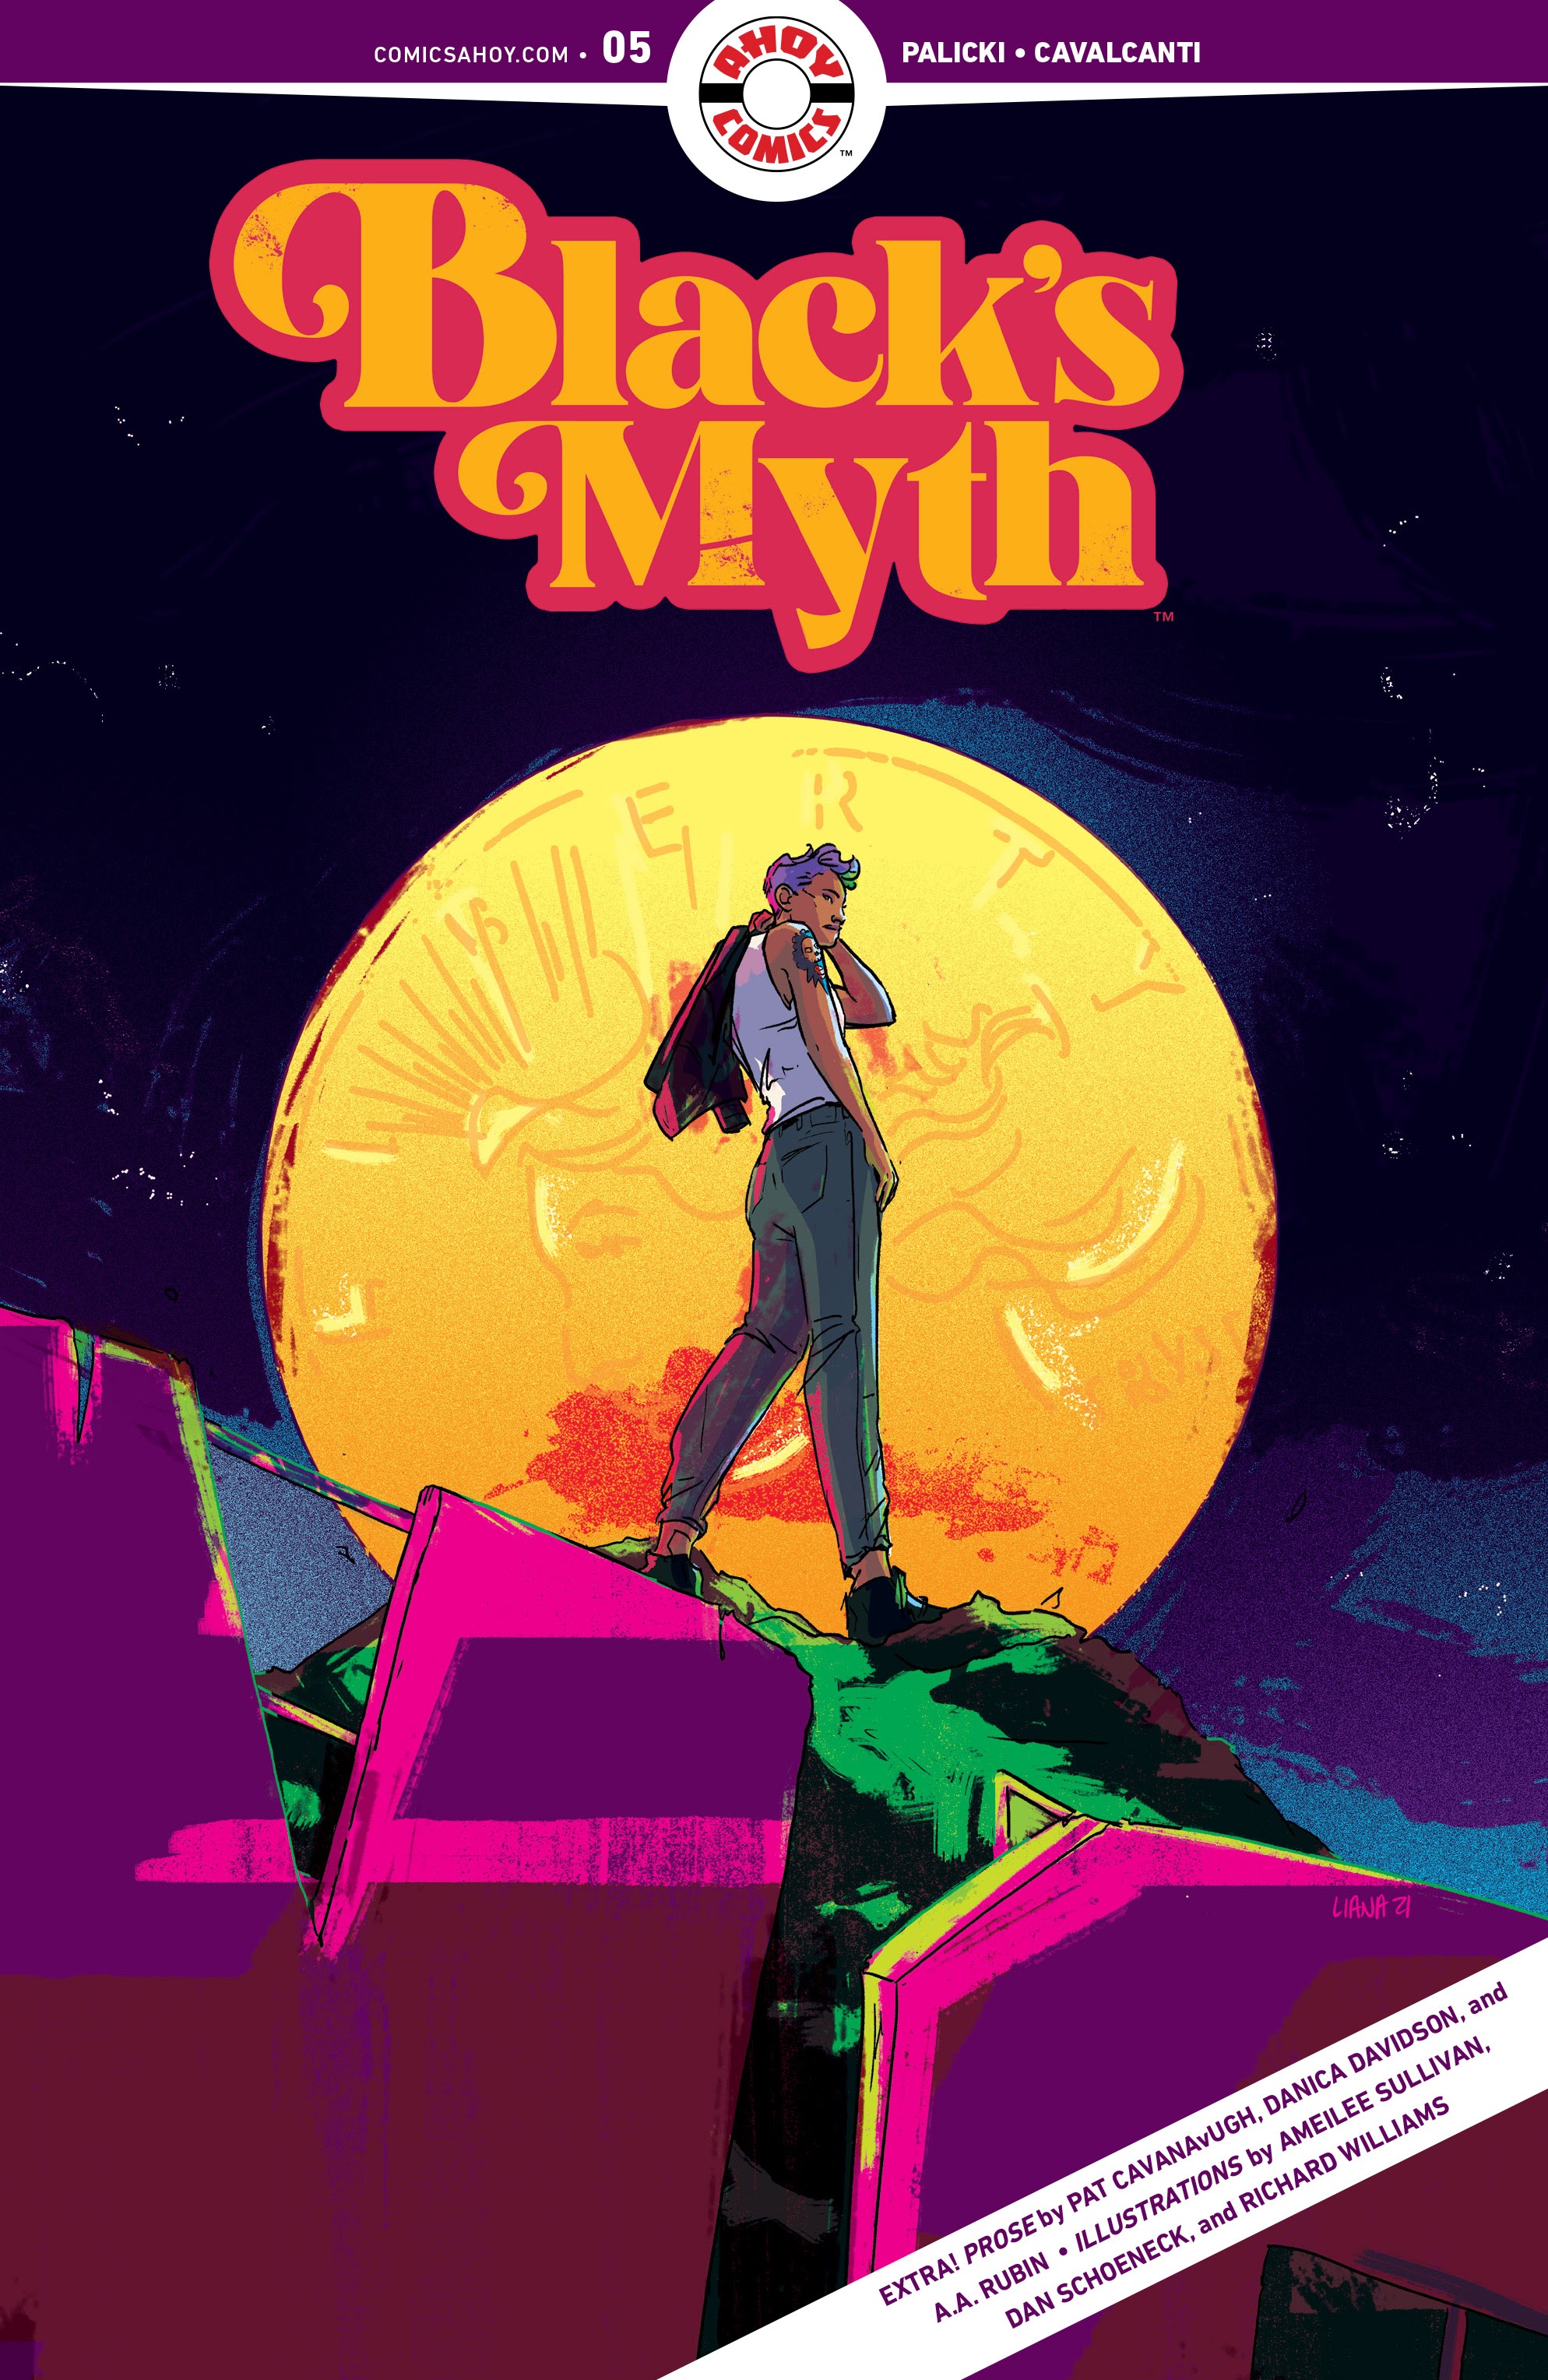 Read online Black's Myth comic -  Issue #5 - 1